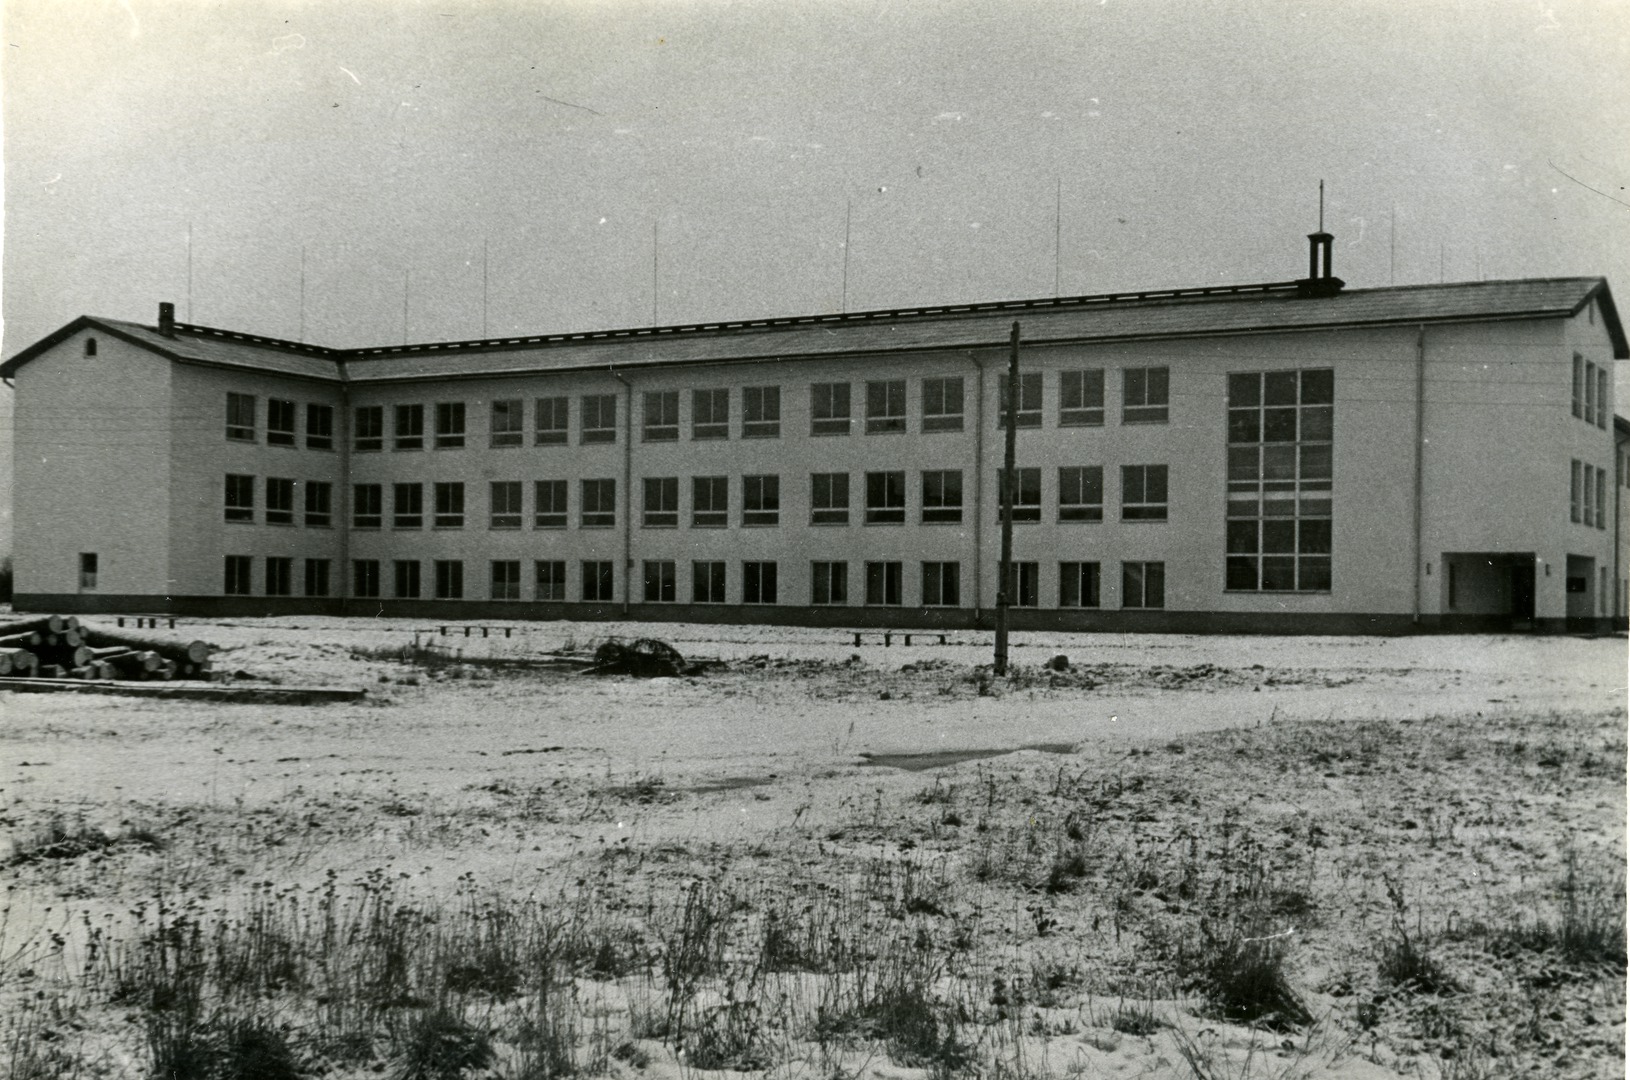 Nõo Secondary School building